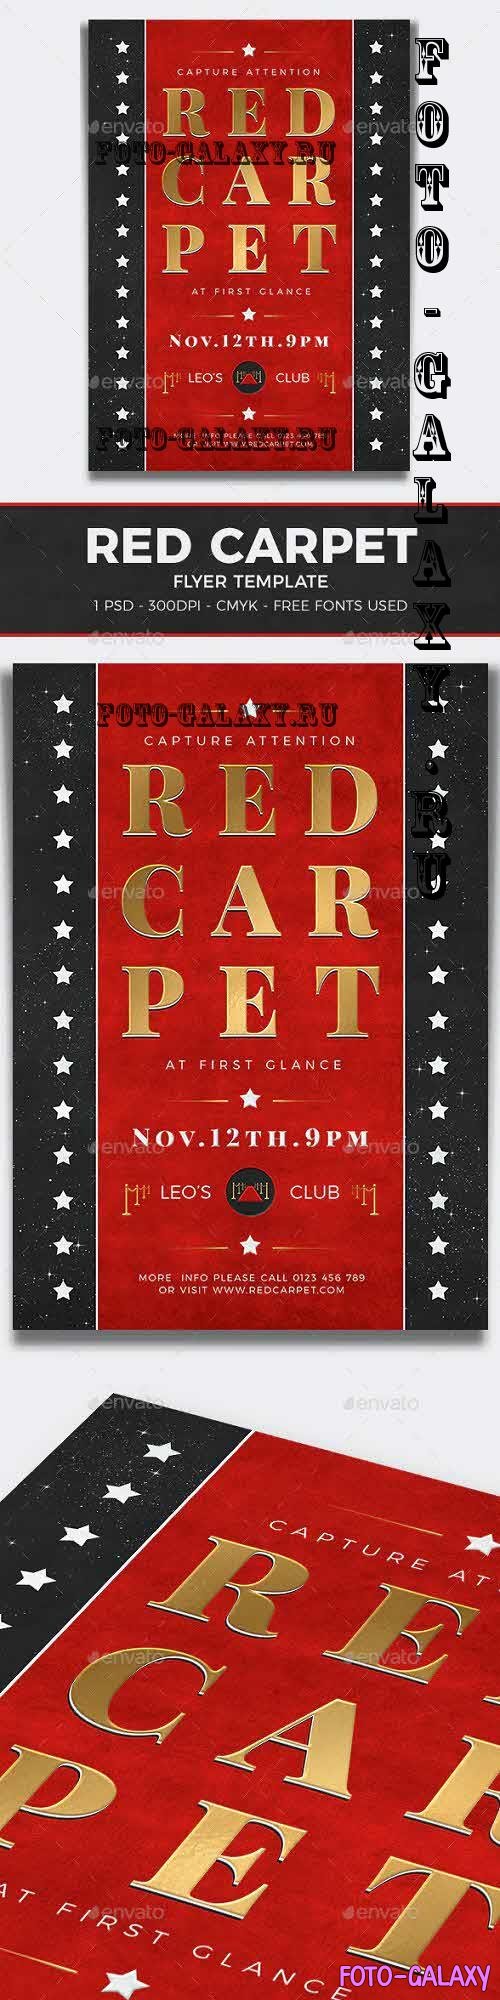 Red Carpet Flyer Template V3 - 38761526 - 7396550